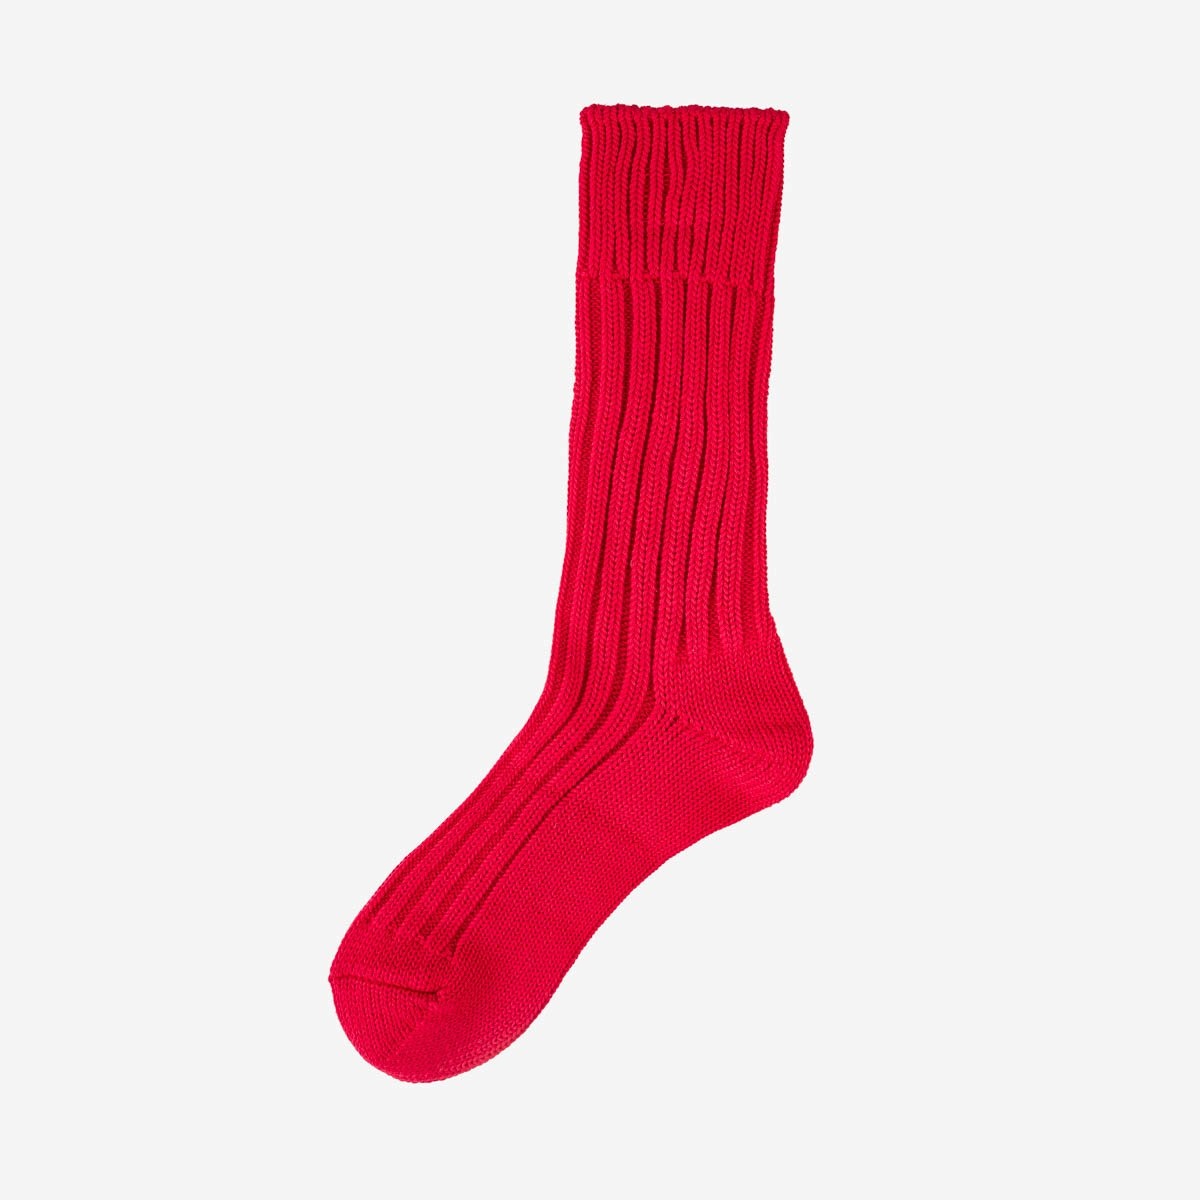 DEC-CAS-RED Decka Cased Heavyweight Plain Socks - Red - 3